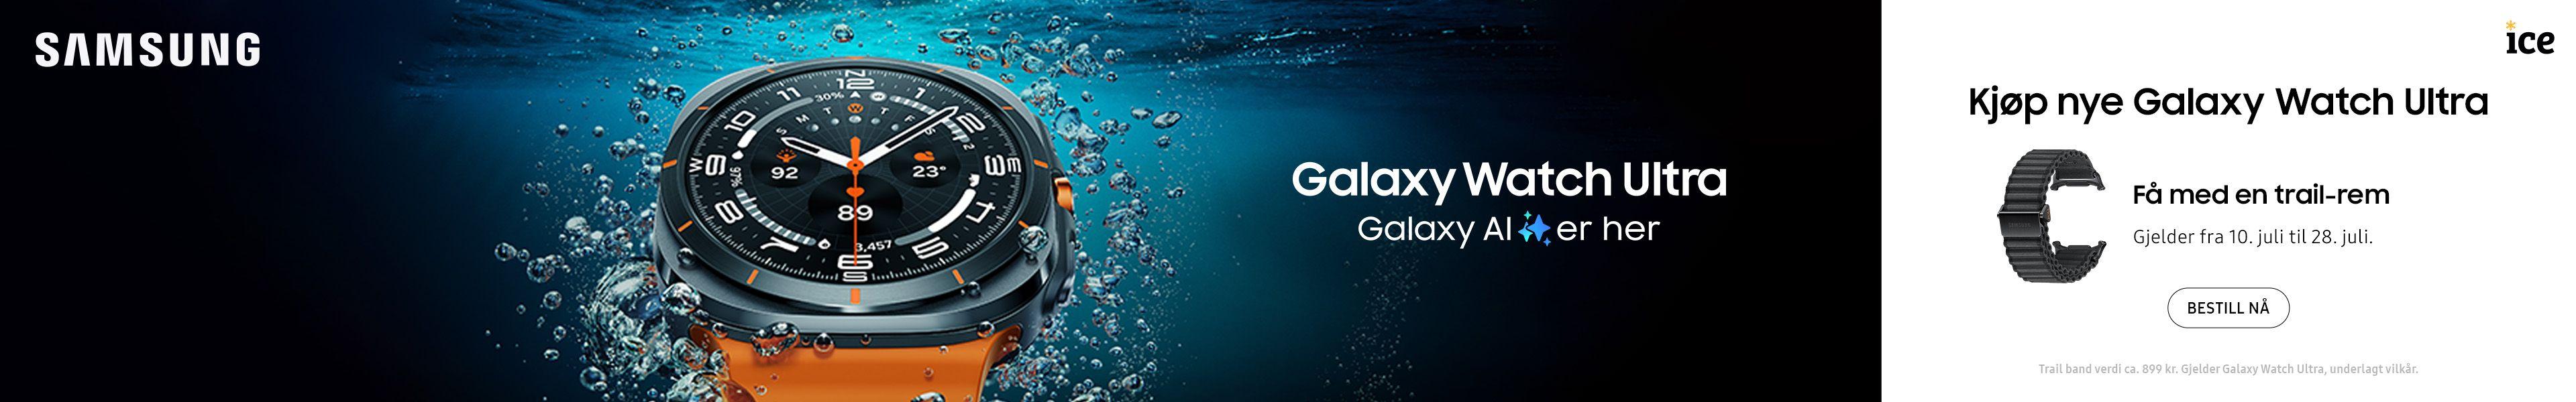 Kjøp nye Galaxy Watch Ultra og få med en ekstra trail-rem